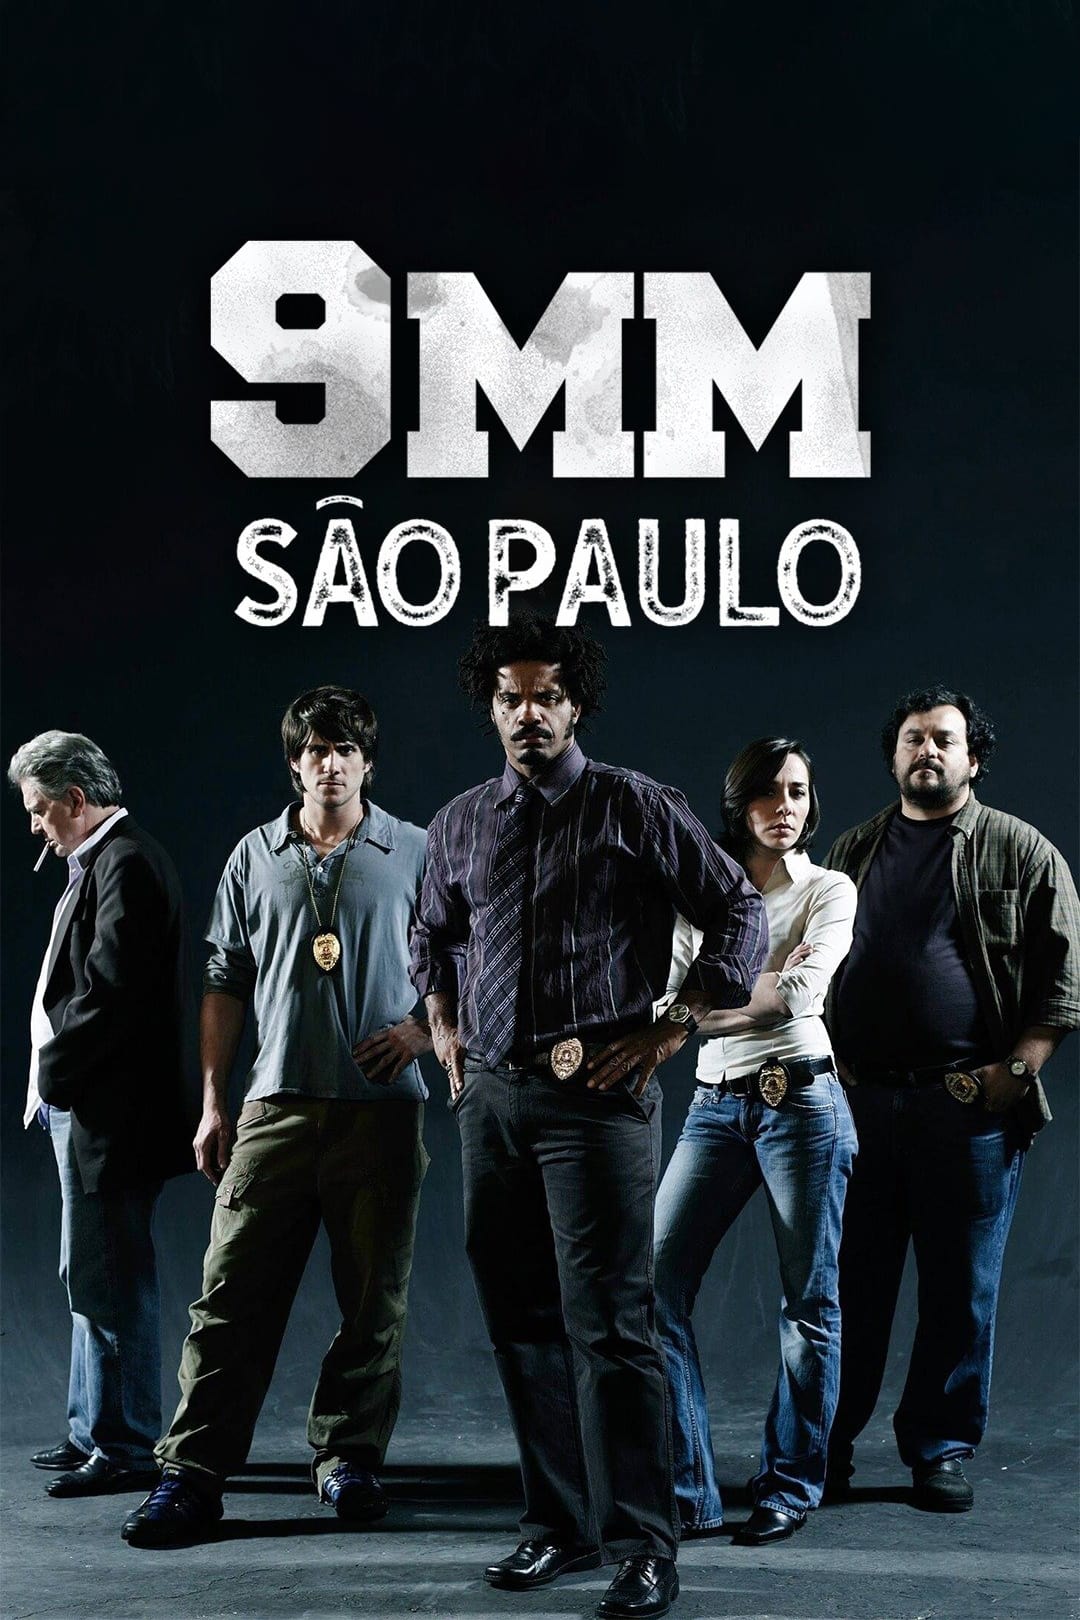 9mm São Paulo